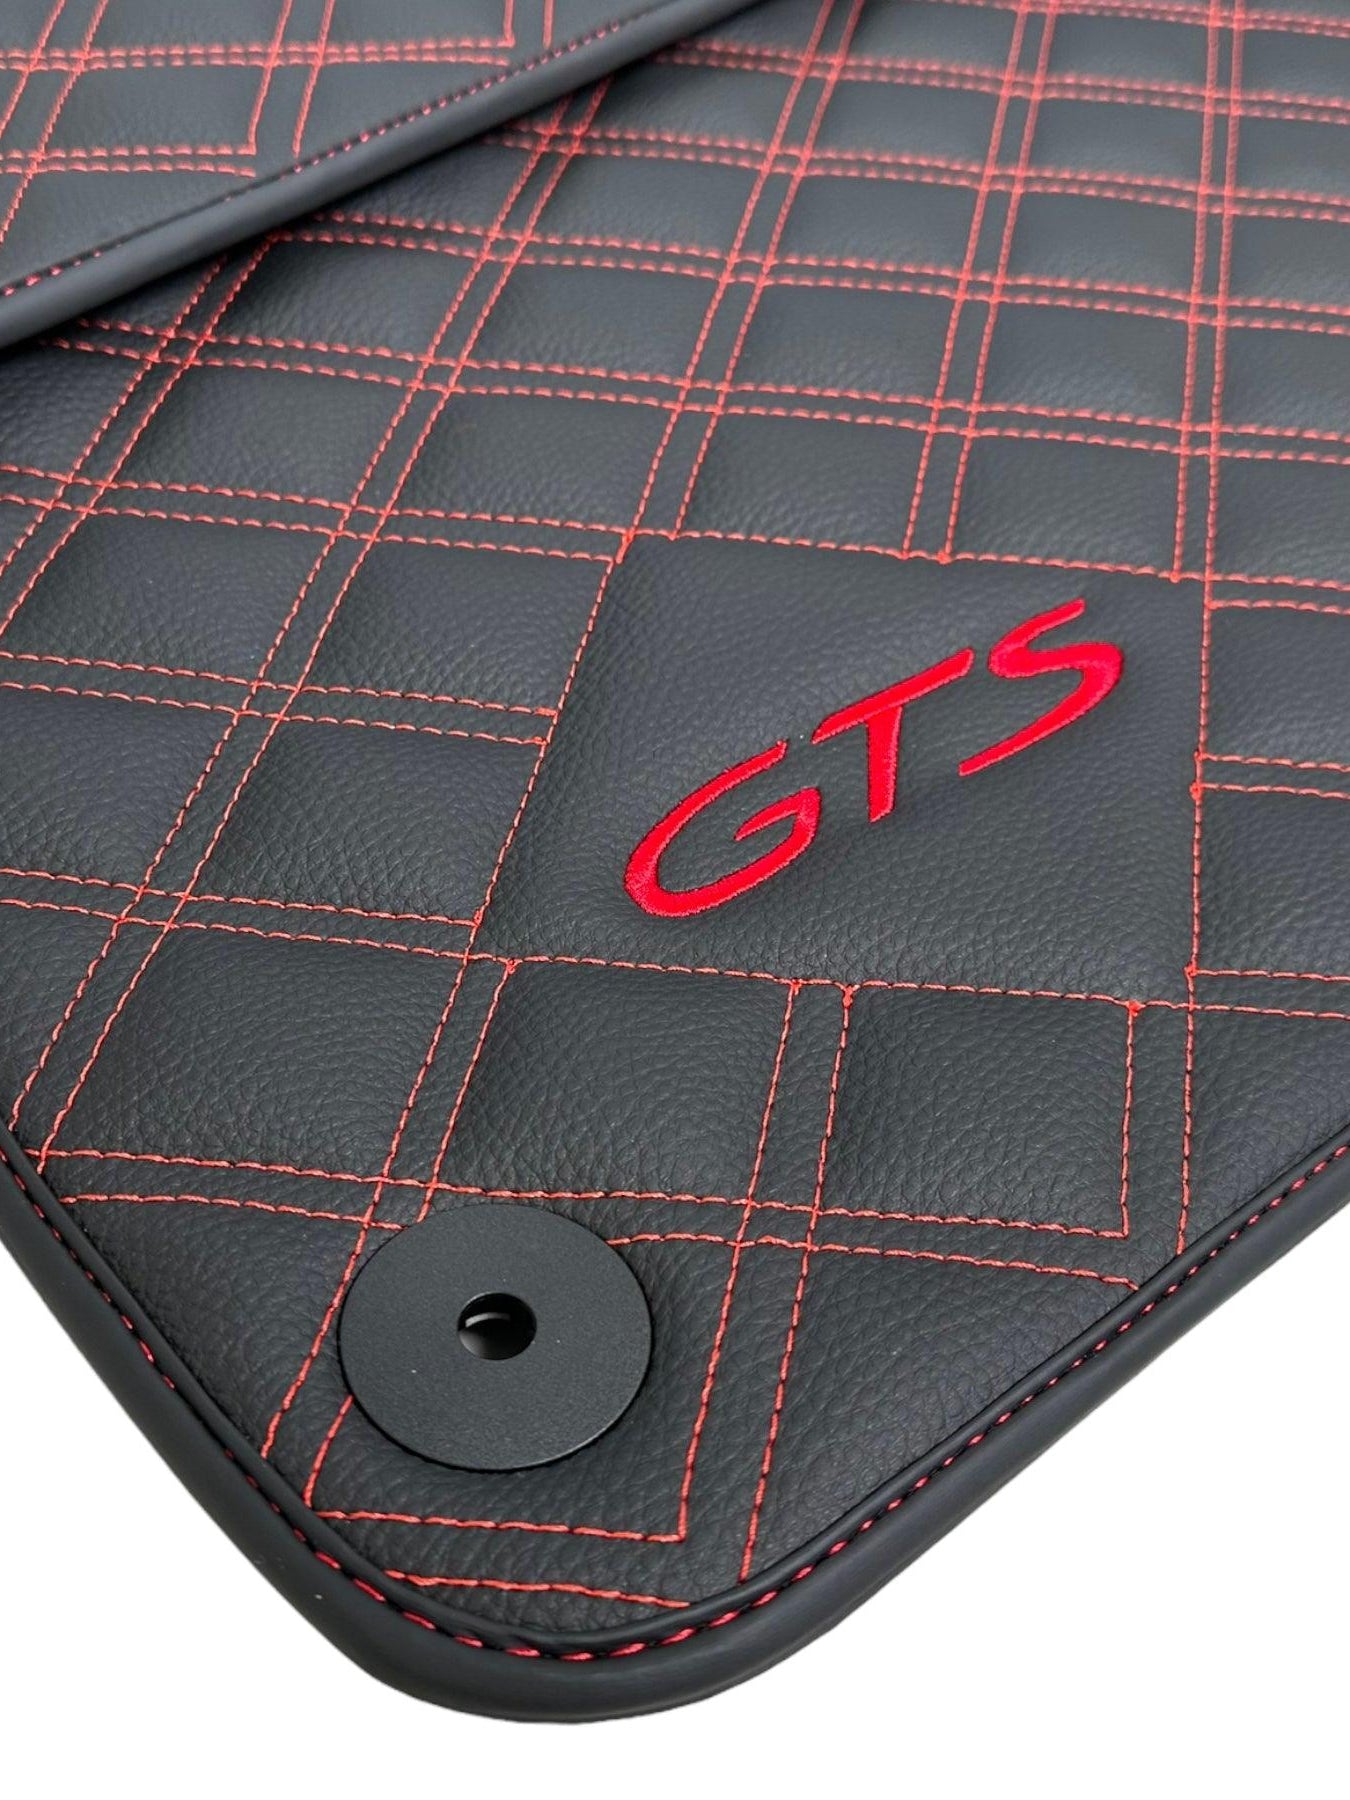 Leather Floor Mats for Porsche 911 - 991 GTS (2012-2019) - AutoWin